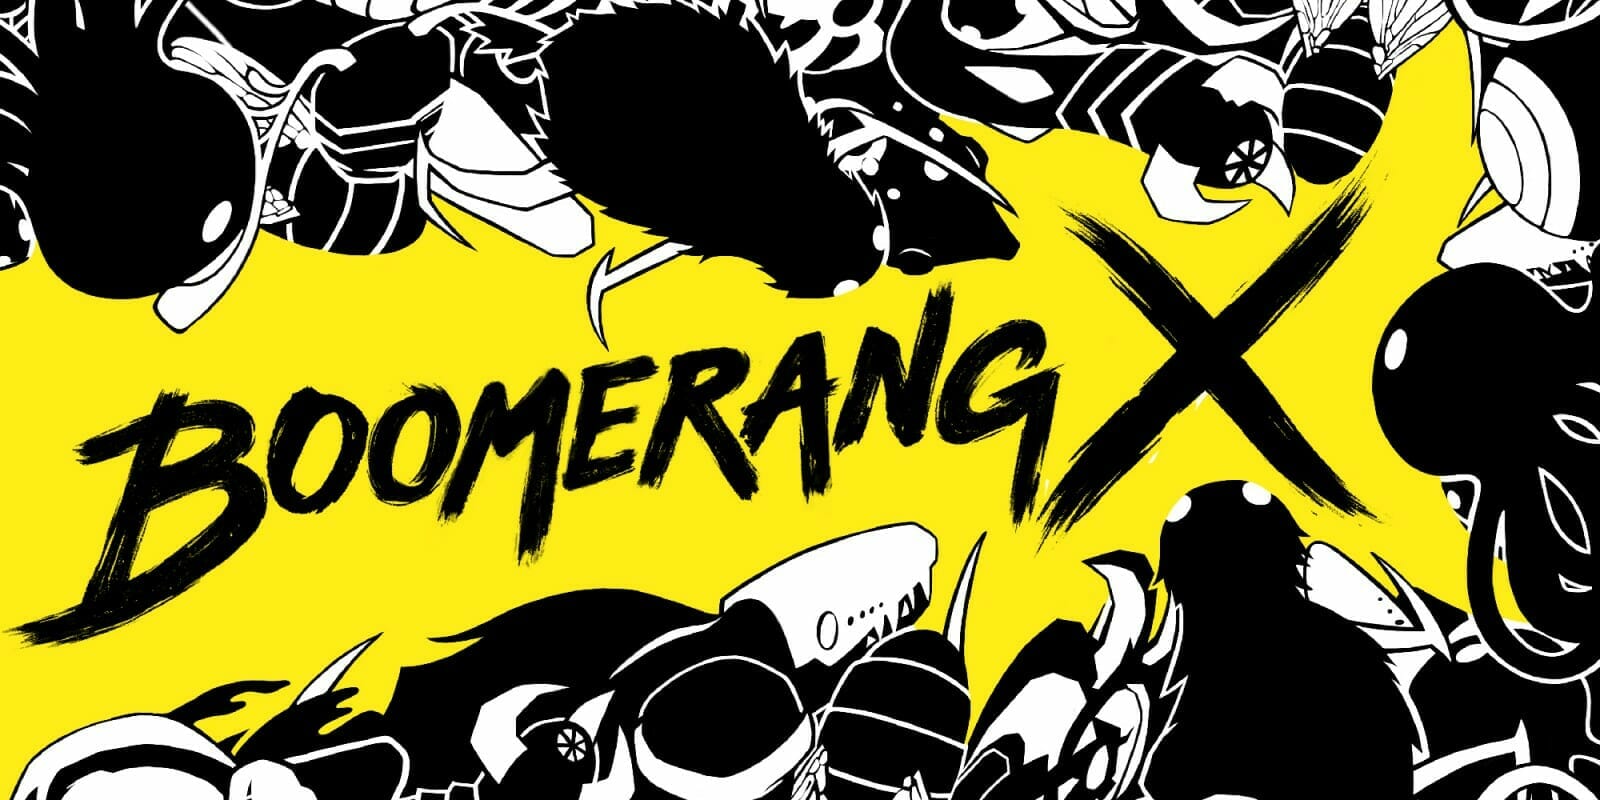 Review: Boomerang X